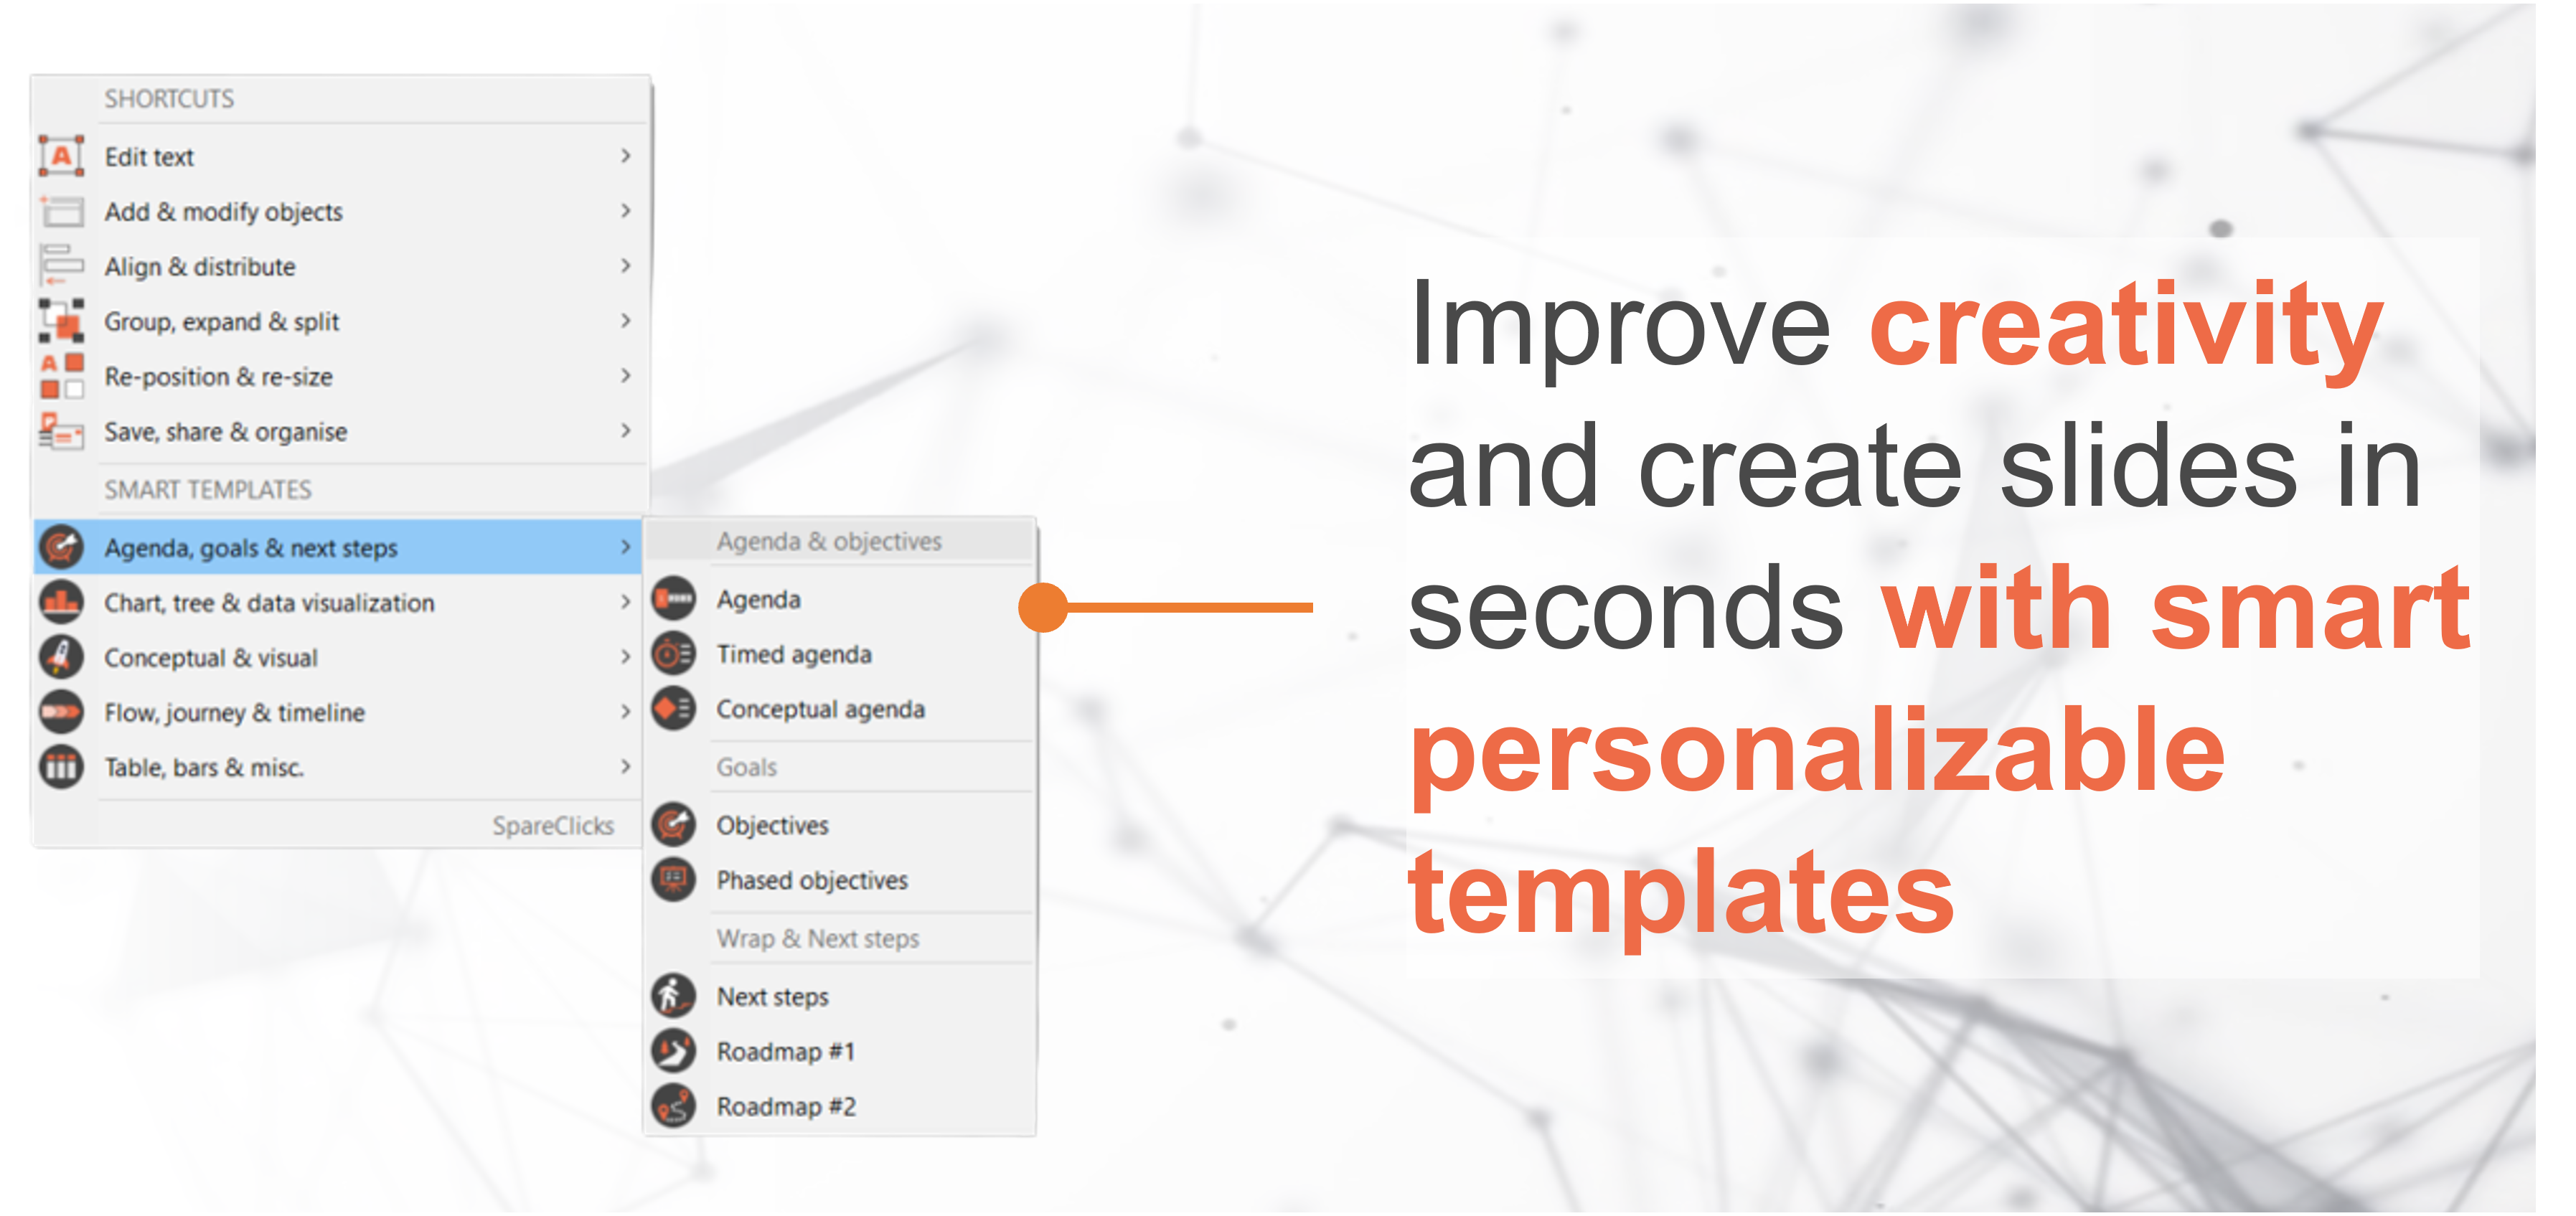 Smart personalizable templates